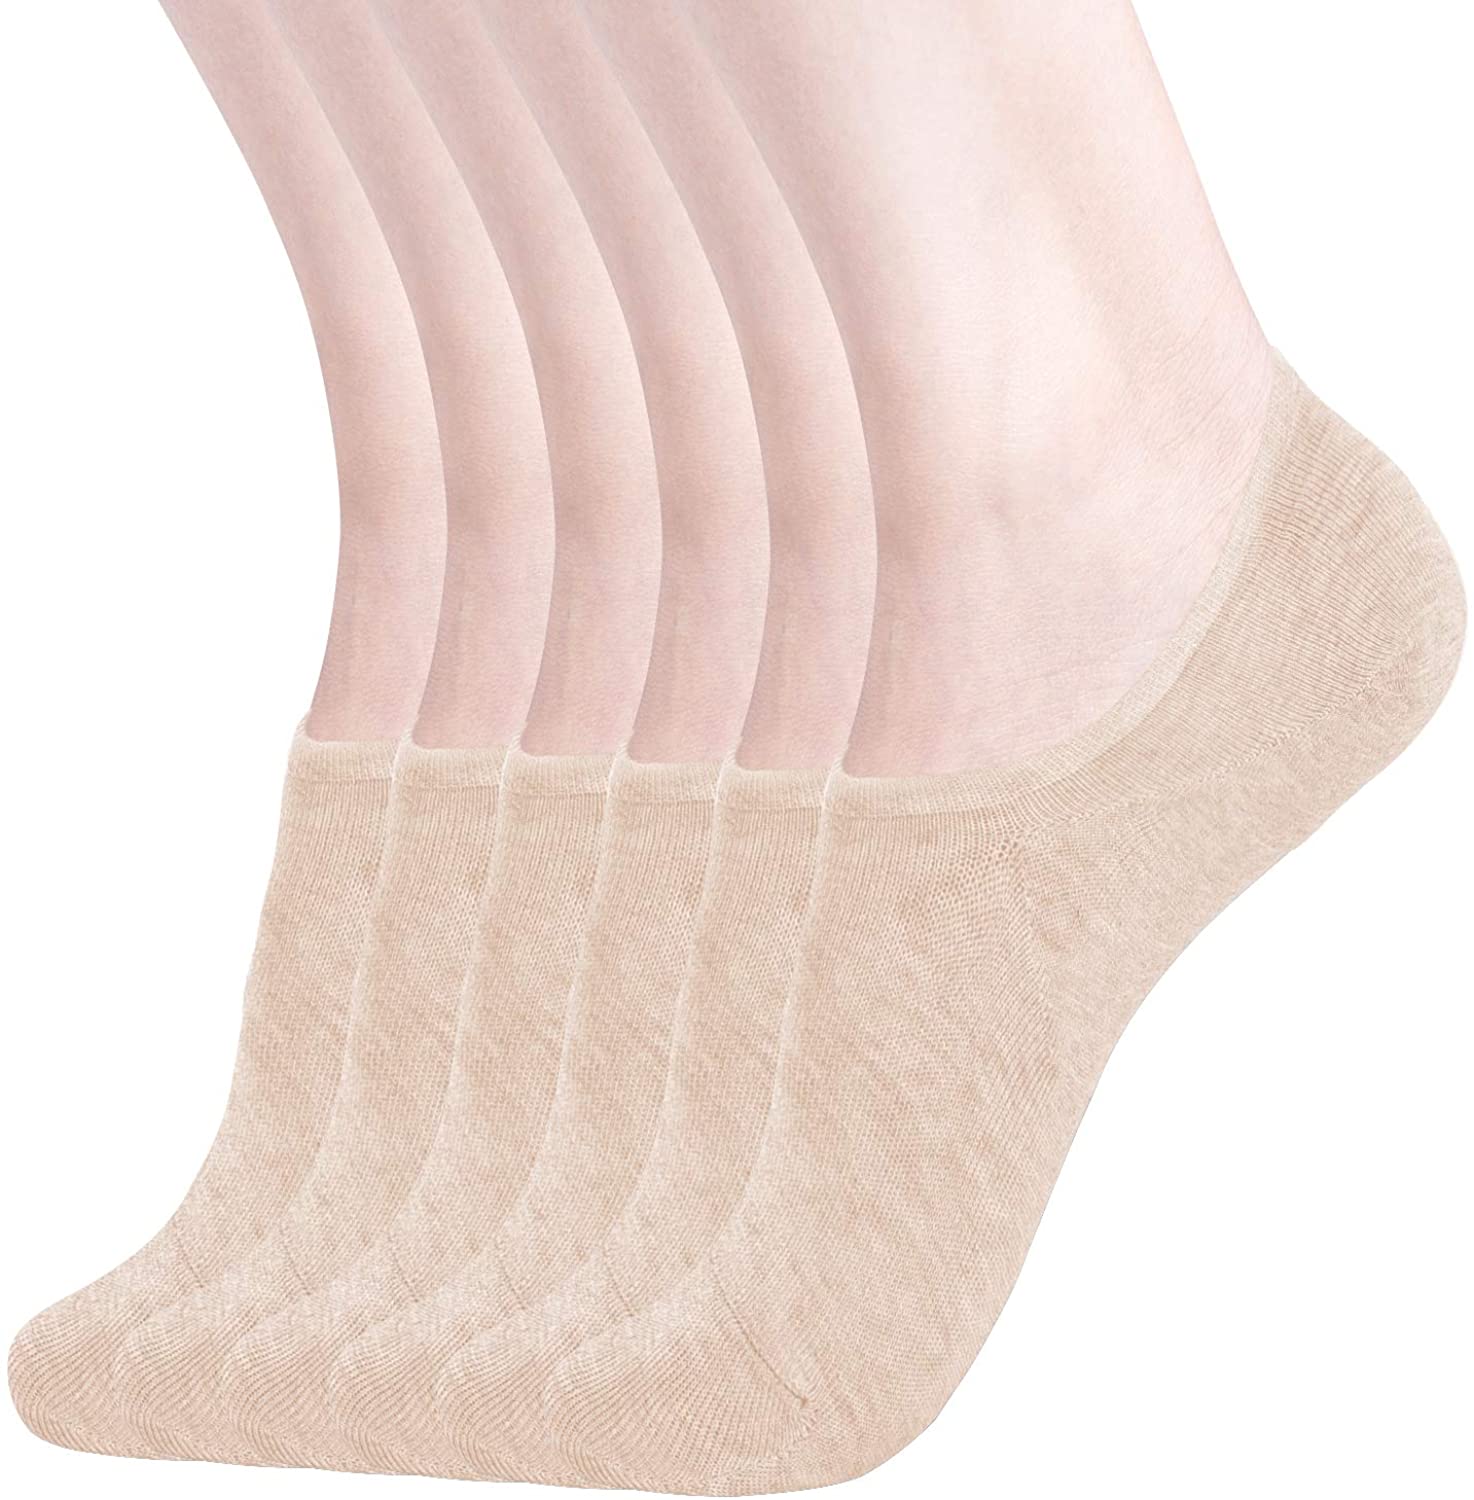 Womens No Show Socks Cotton Non Slip Invisible Flat Socks Casual Boat Line Socks Pack 5